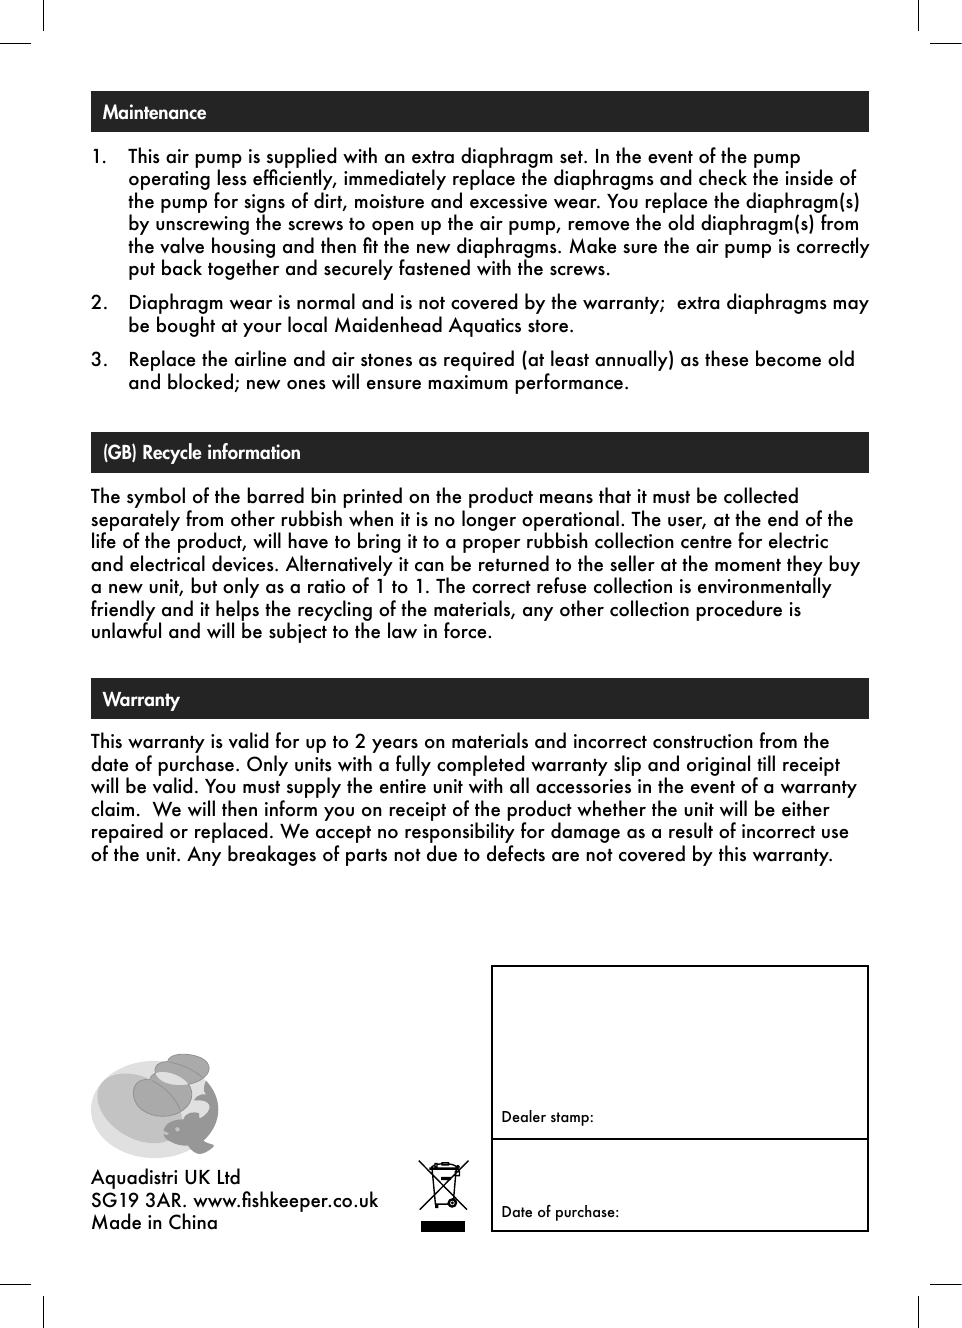 Page 2 of 2 - Air-pump-User-Manual